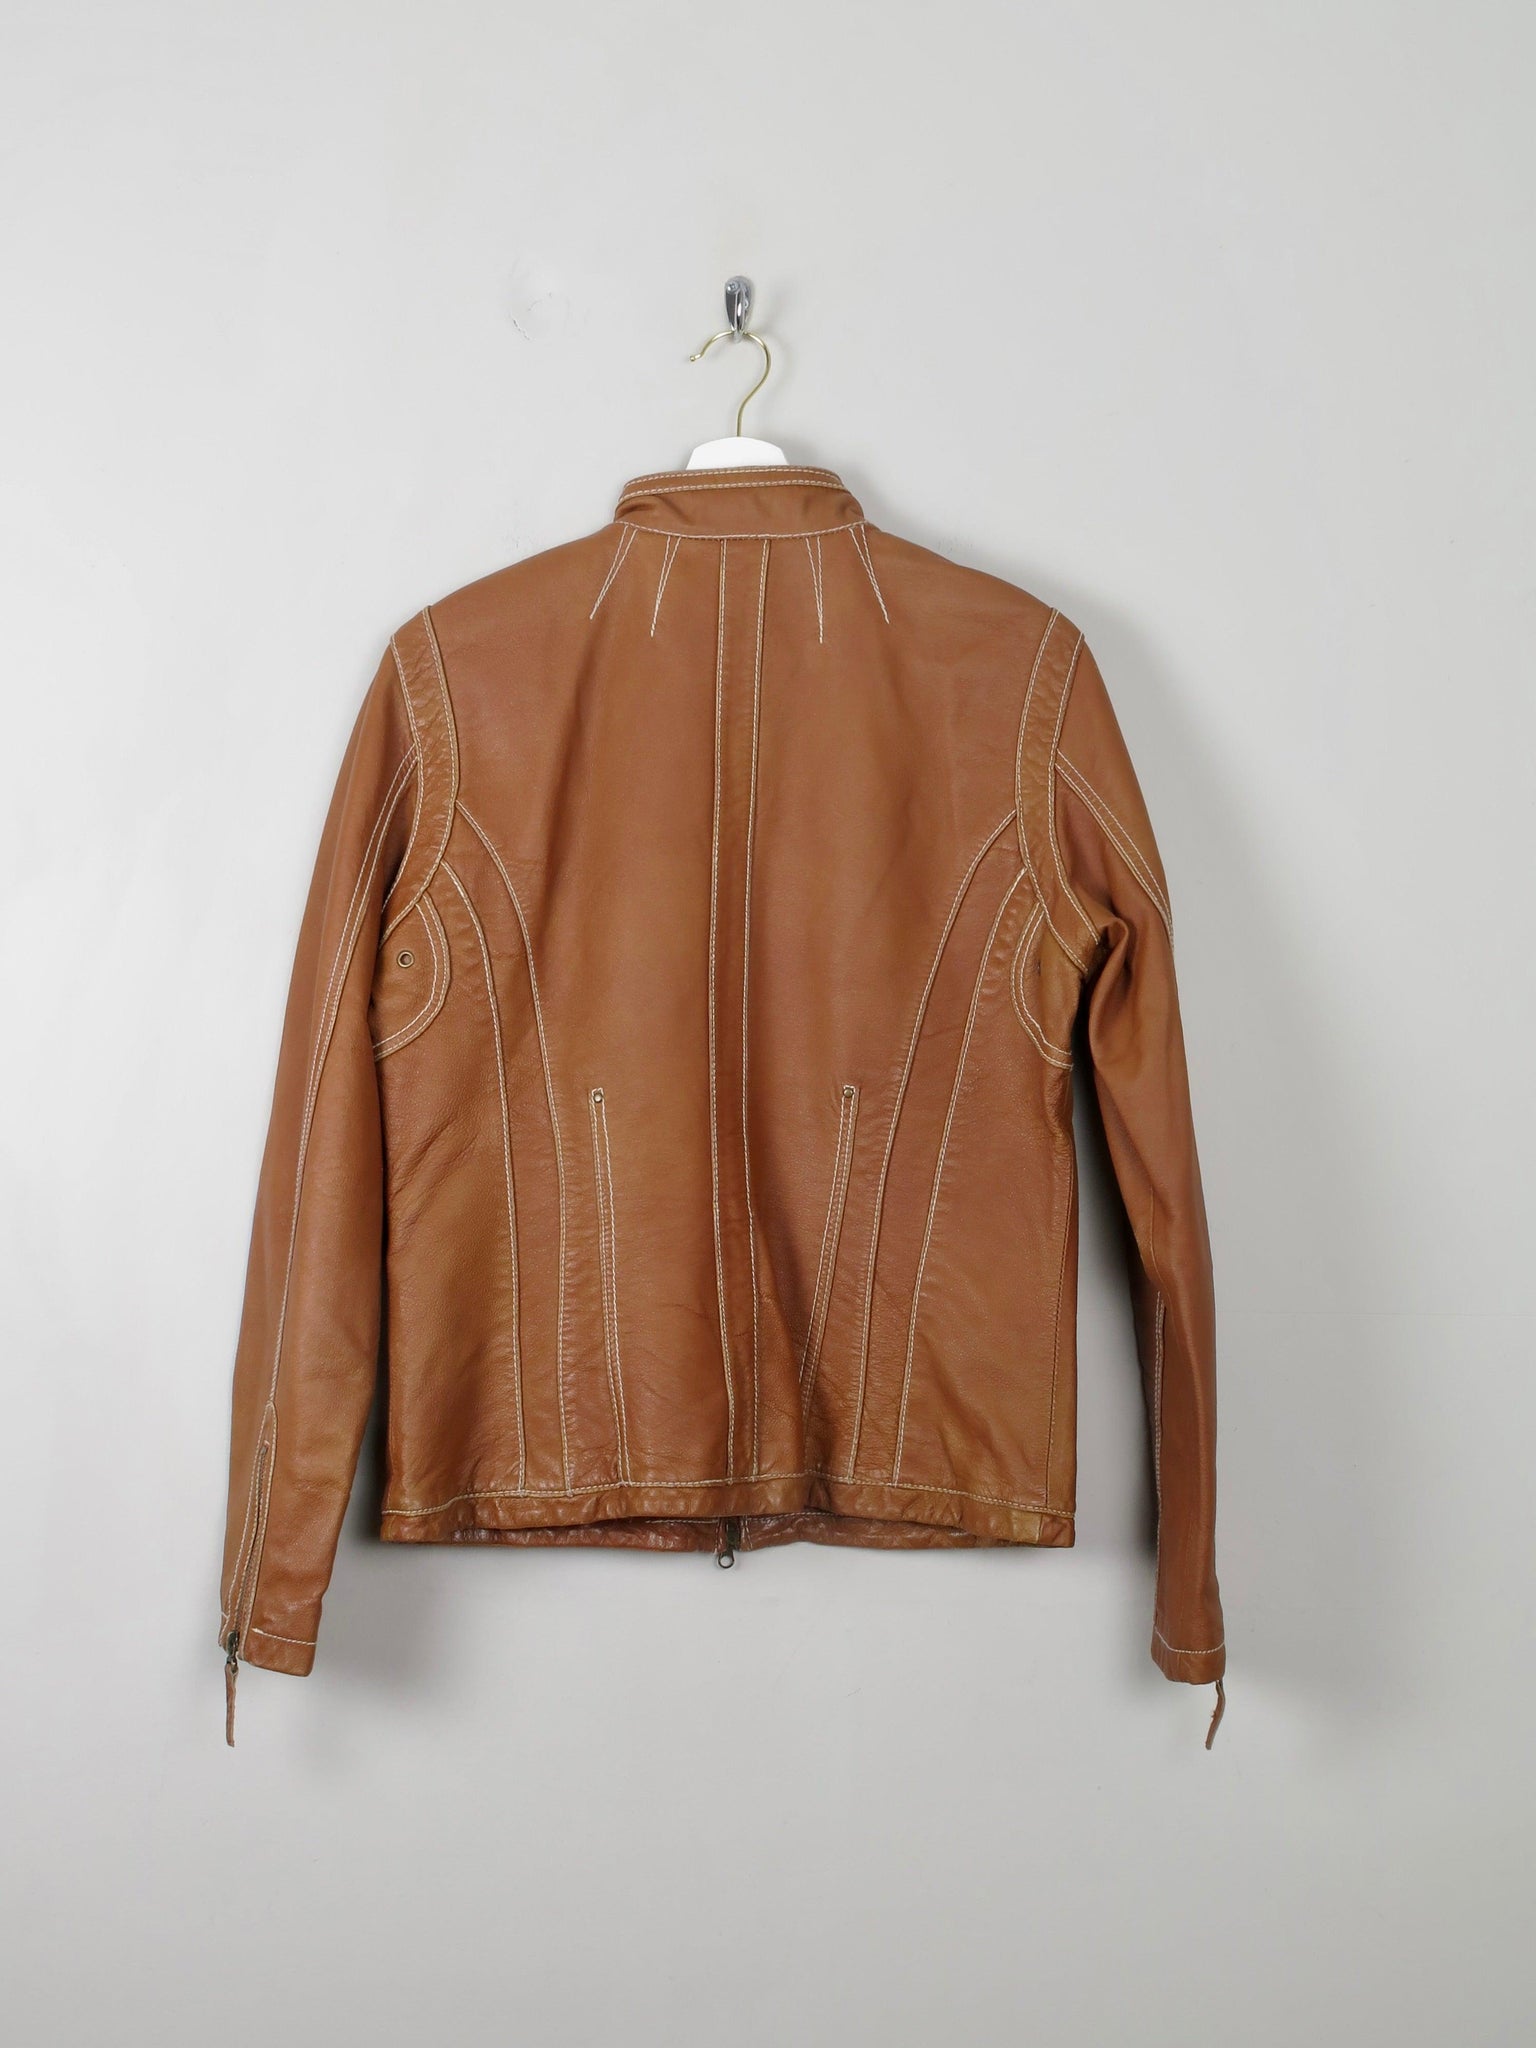 Women's Vintage Tan Leather Biker Jacket S/M - The Harlequin